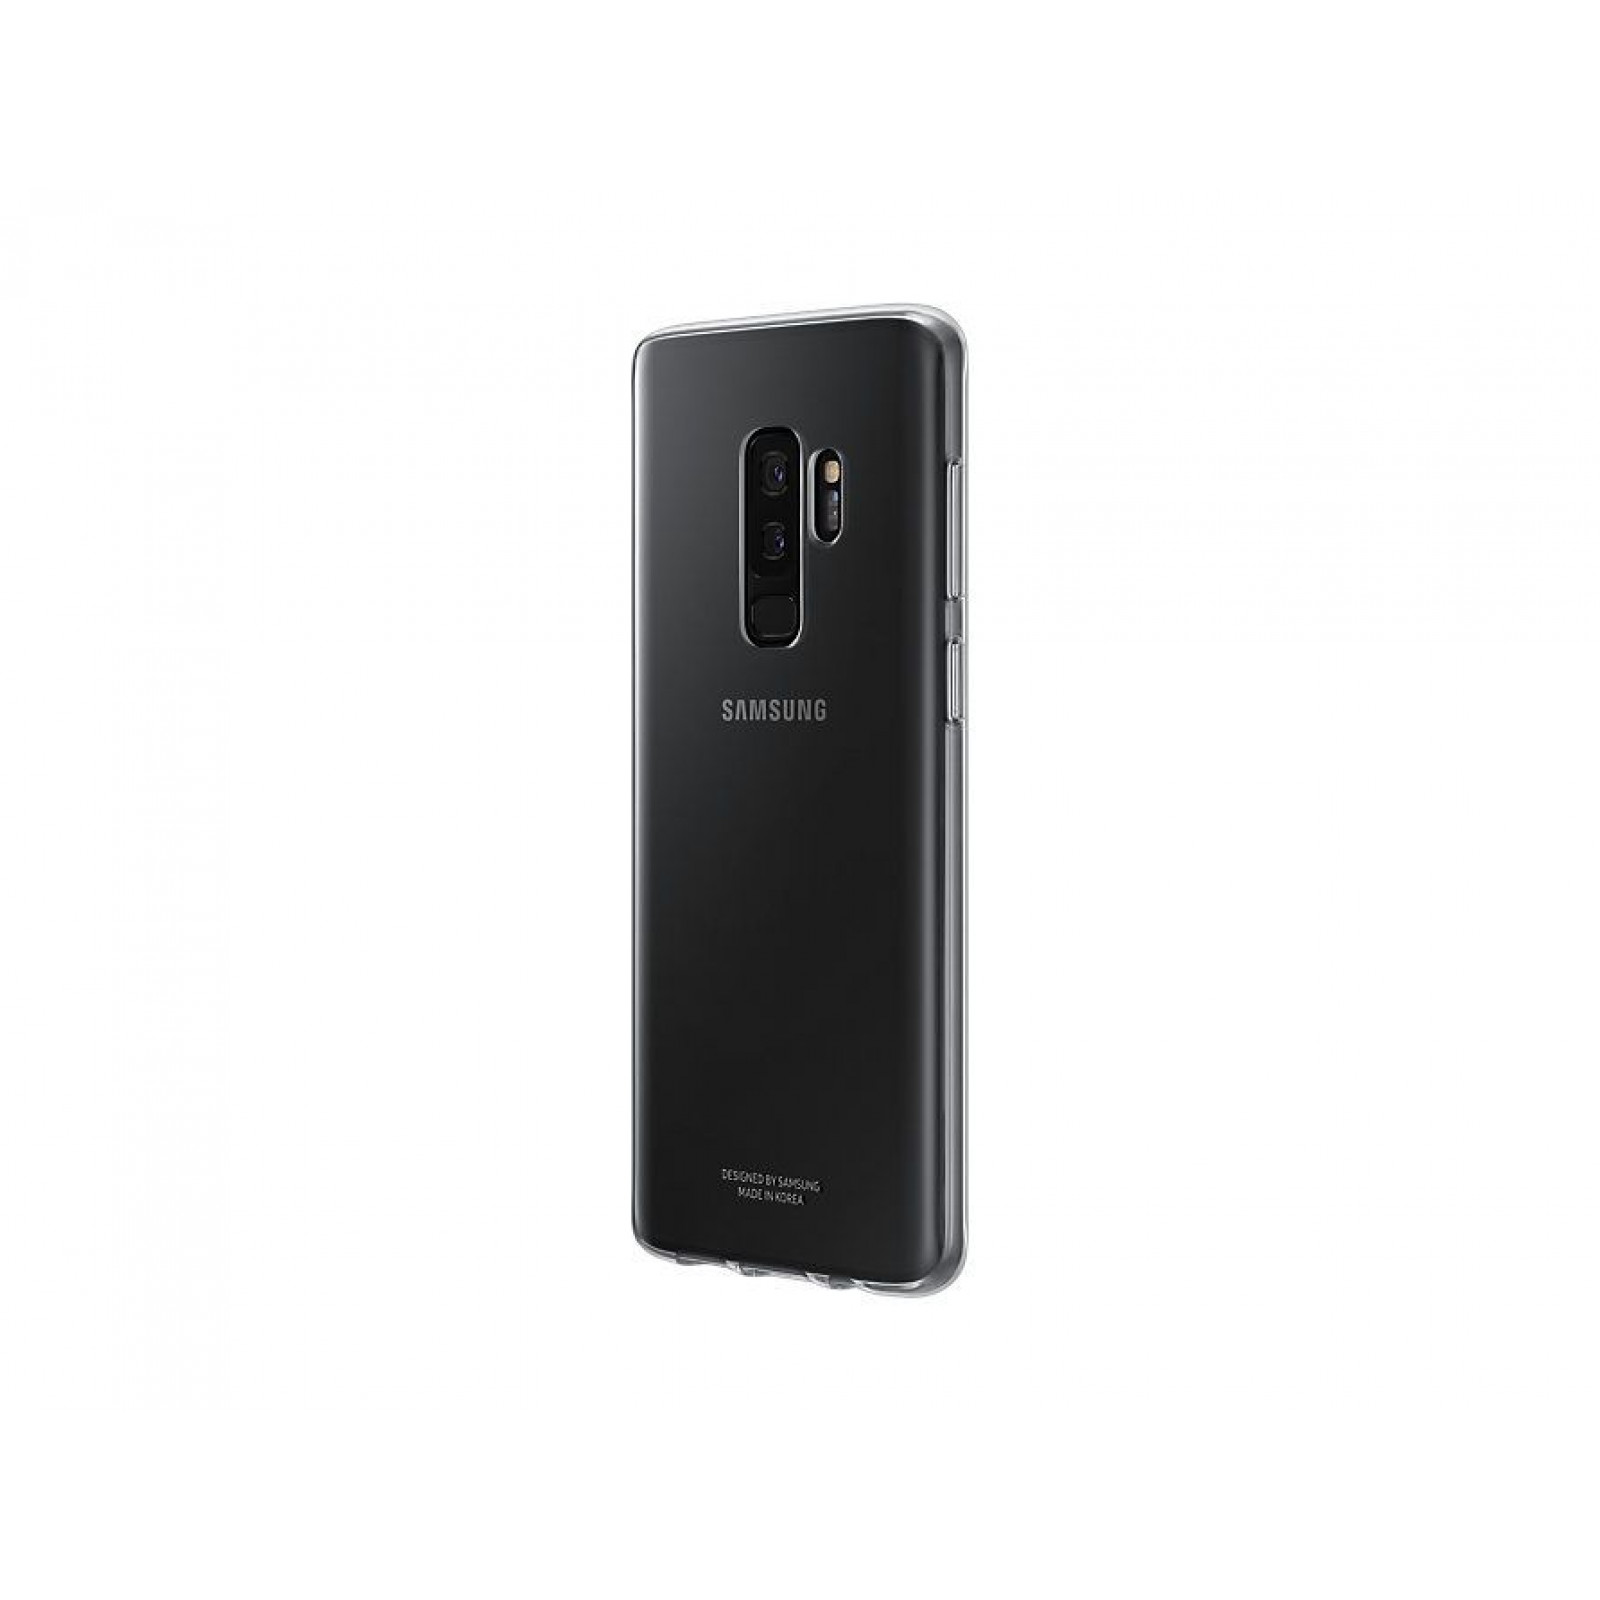 Оригинален гръб Clear Cover за Samsung Galaxy S9 Plus - Прозрачен